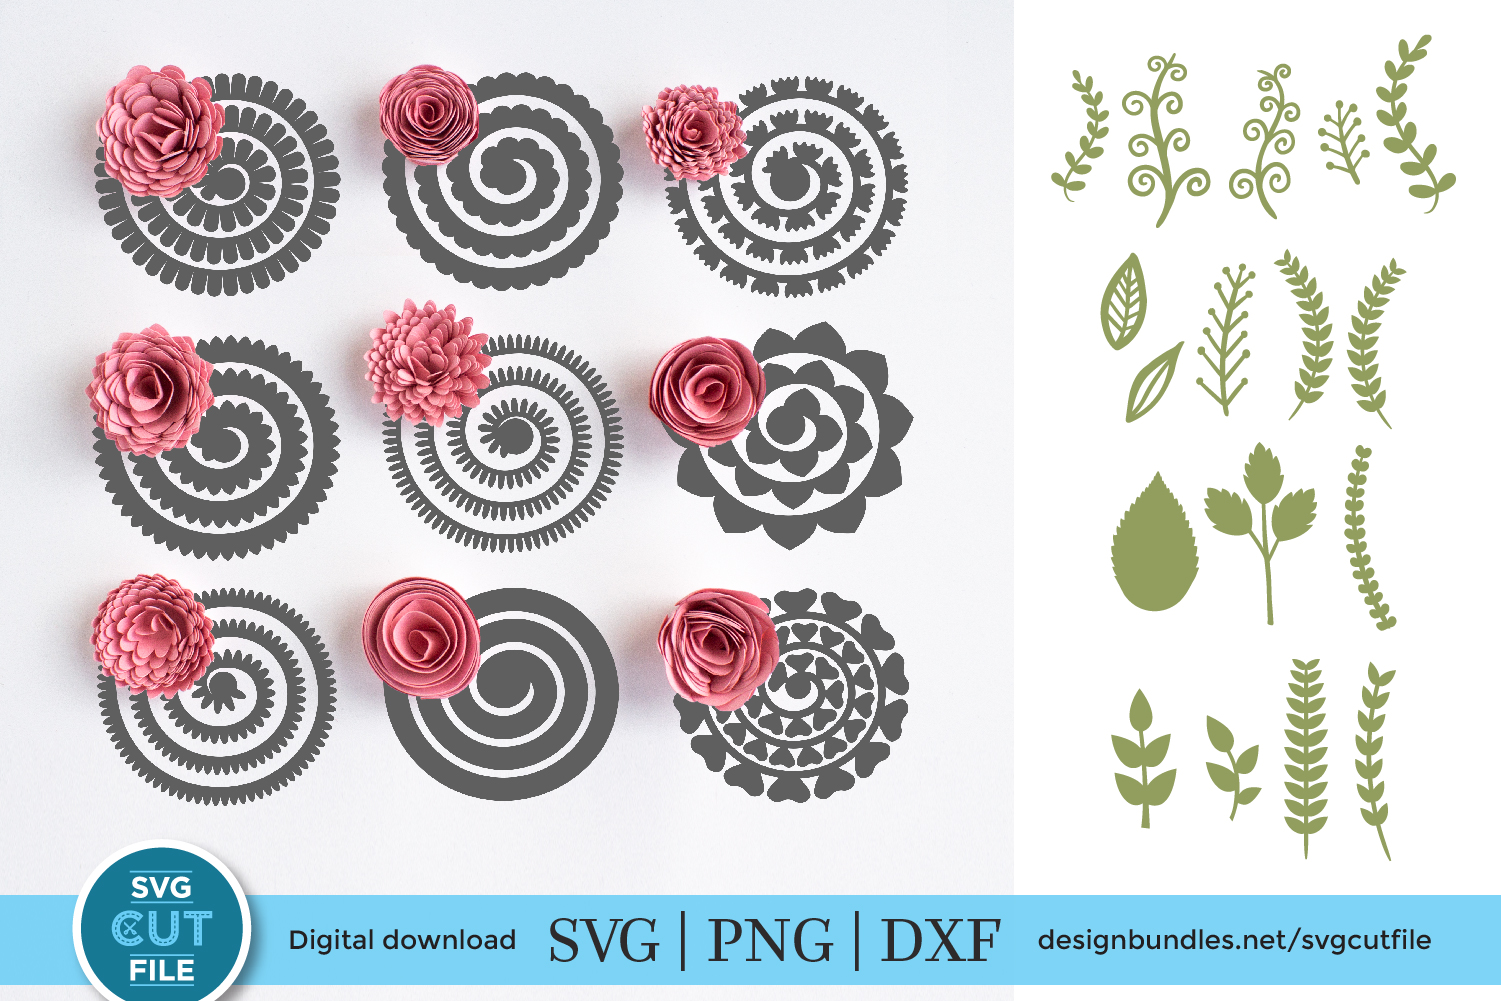 Rolled Flower Svg - Layered SVG Cut File